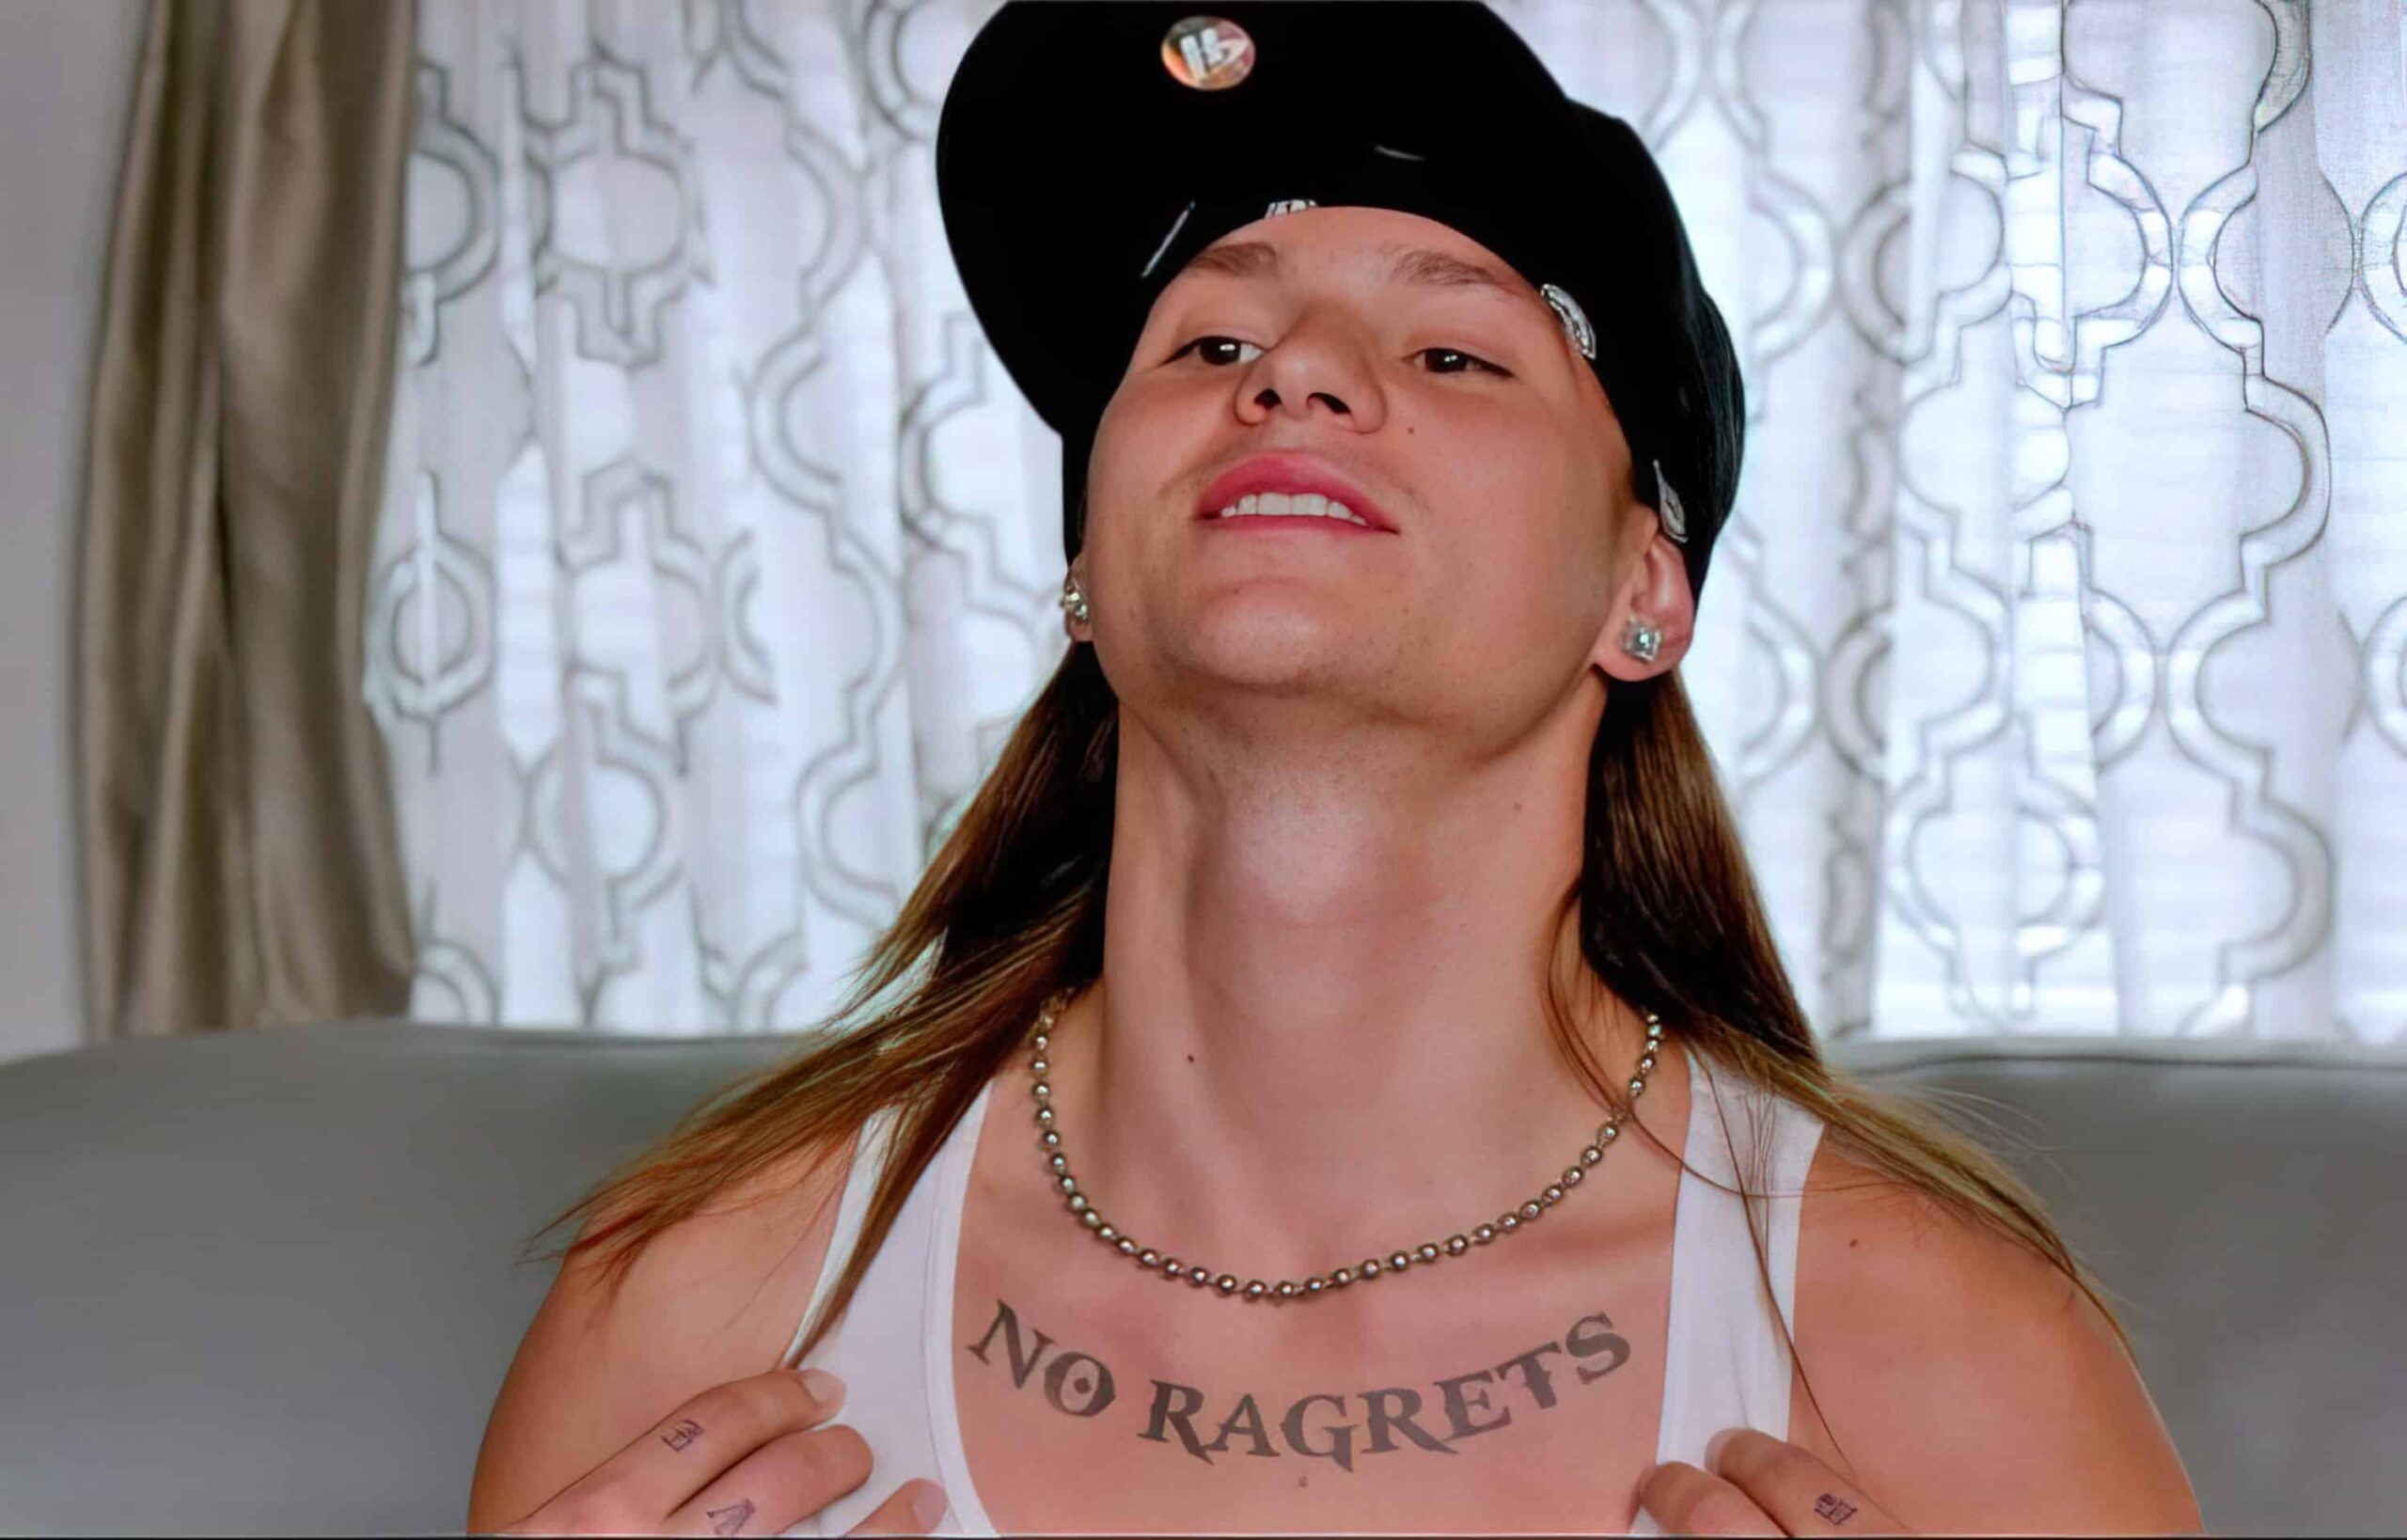 We're The Millers No Ragrets Tattoo | No ragrets tattoo, No regrets tattoo,  Tattoo shop